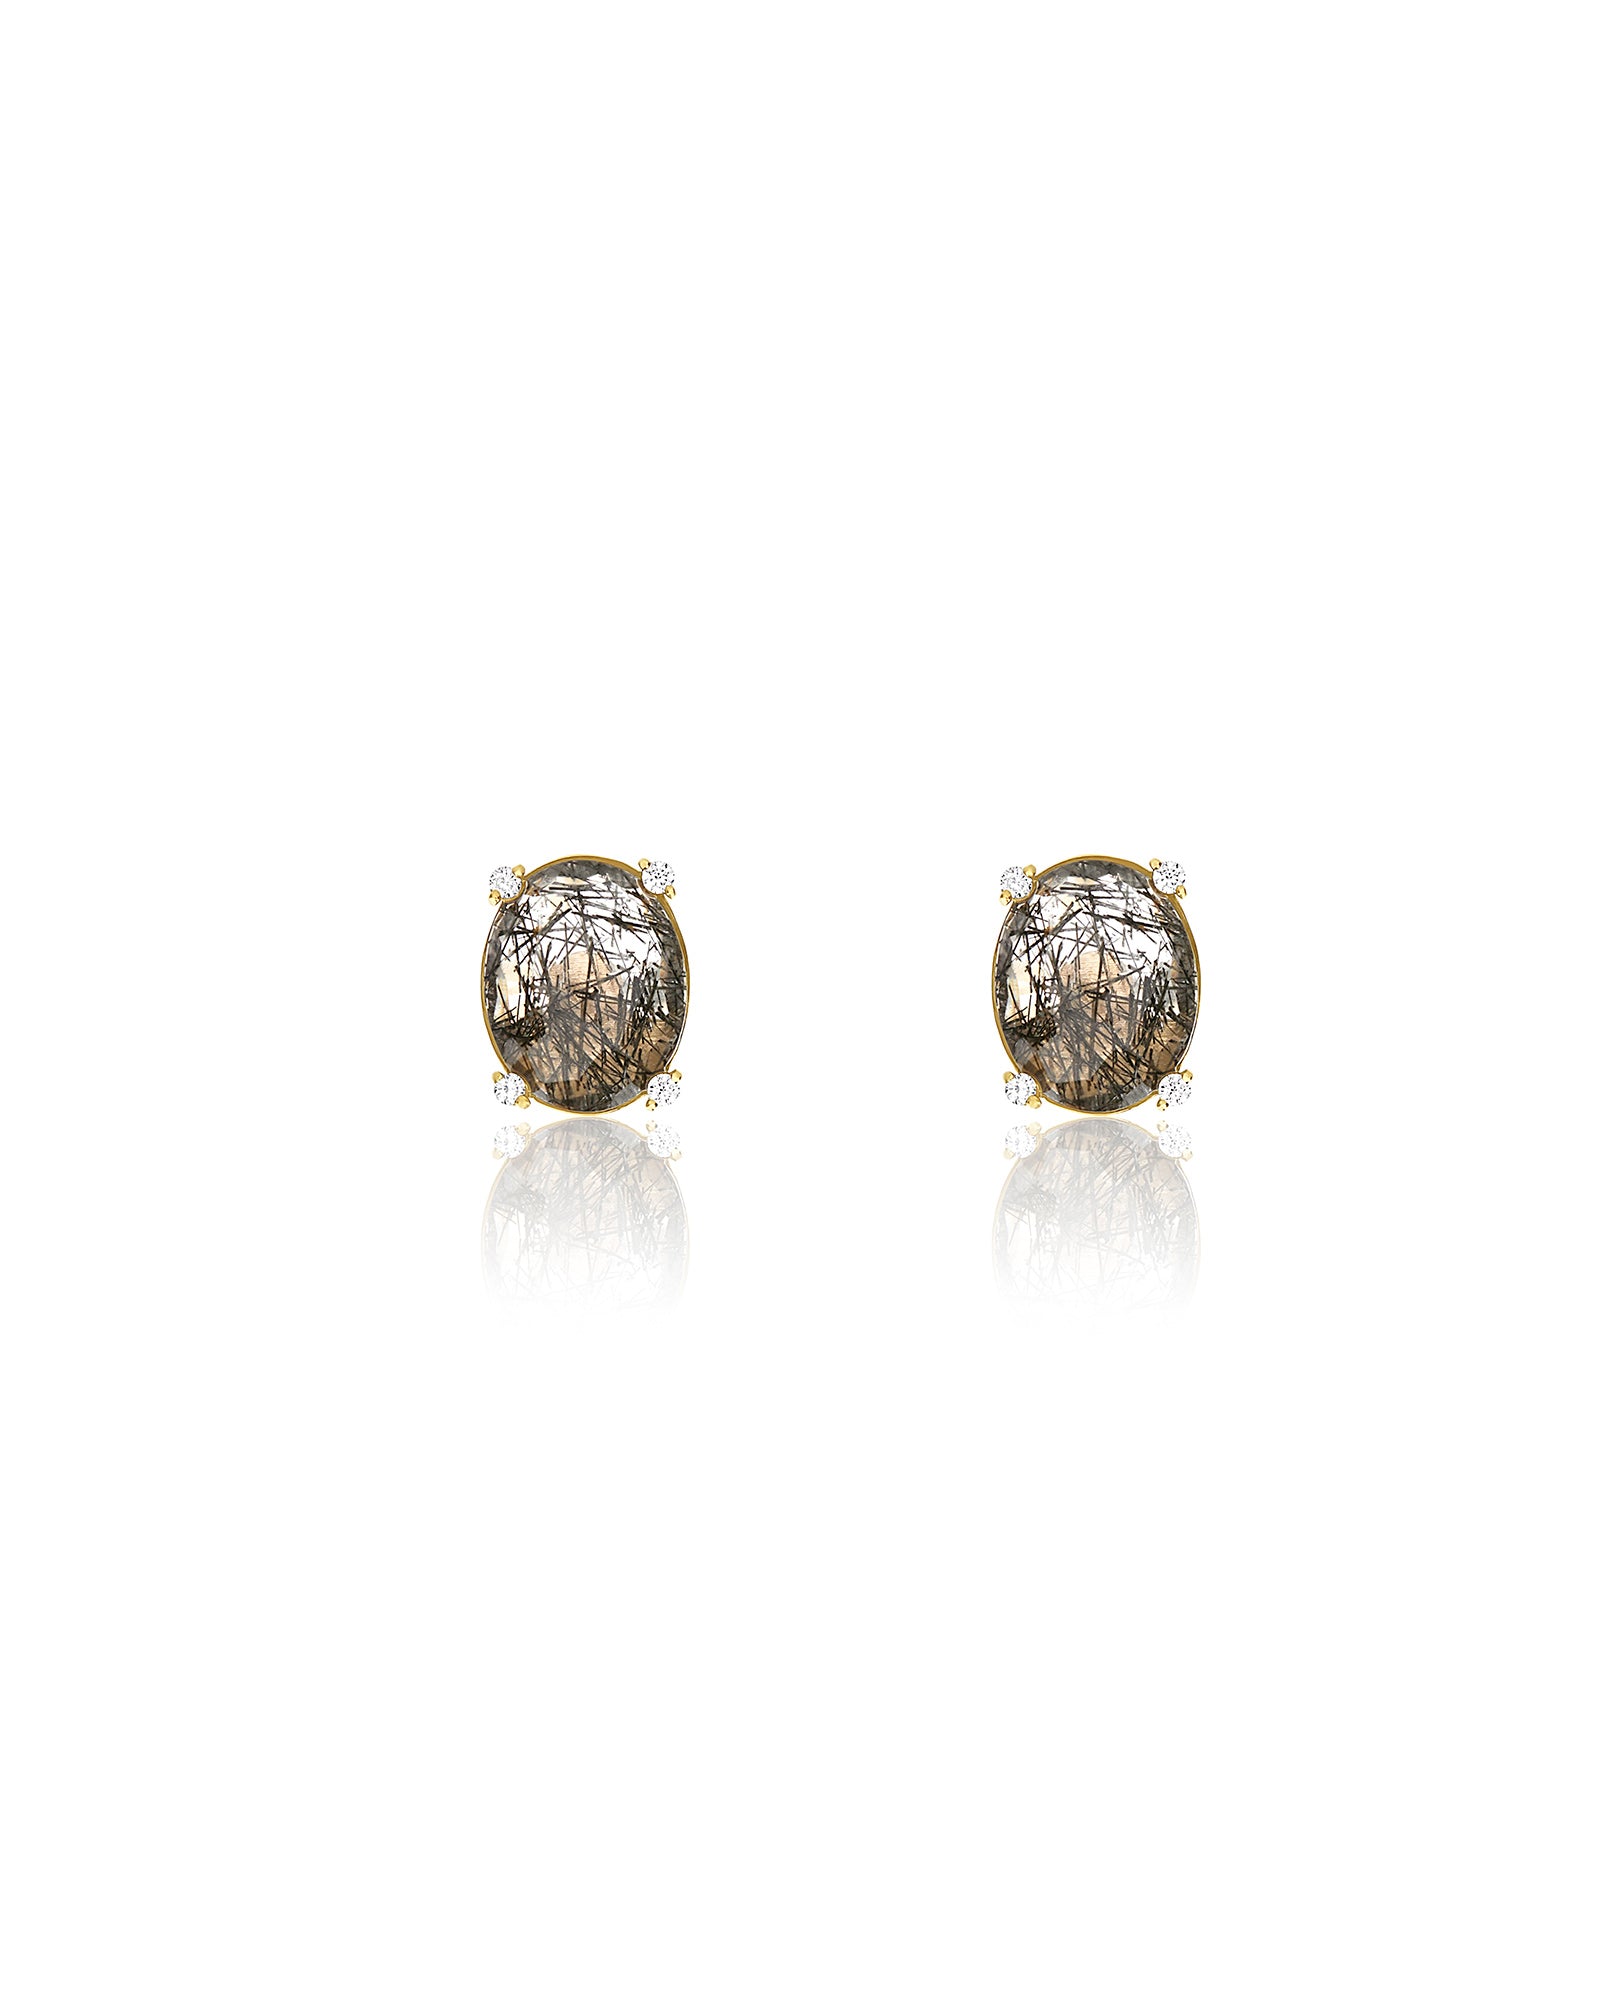 "Ipanema" Grey rutilated quartz, diamonds and 18kt gold medium stud earrings